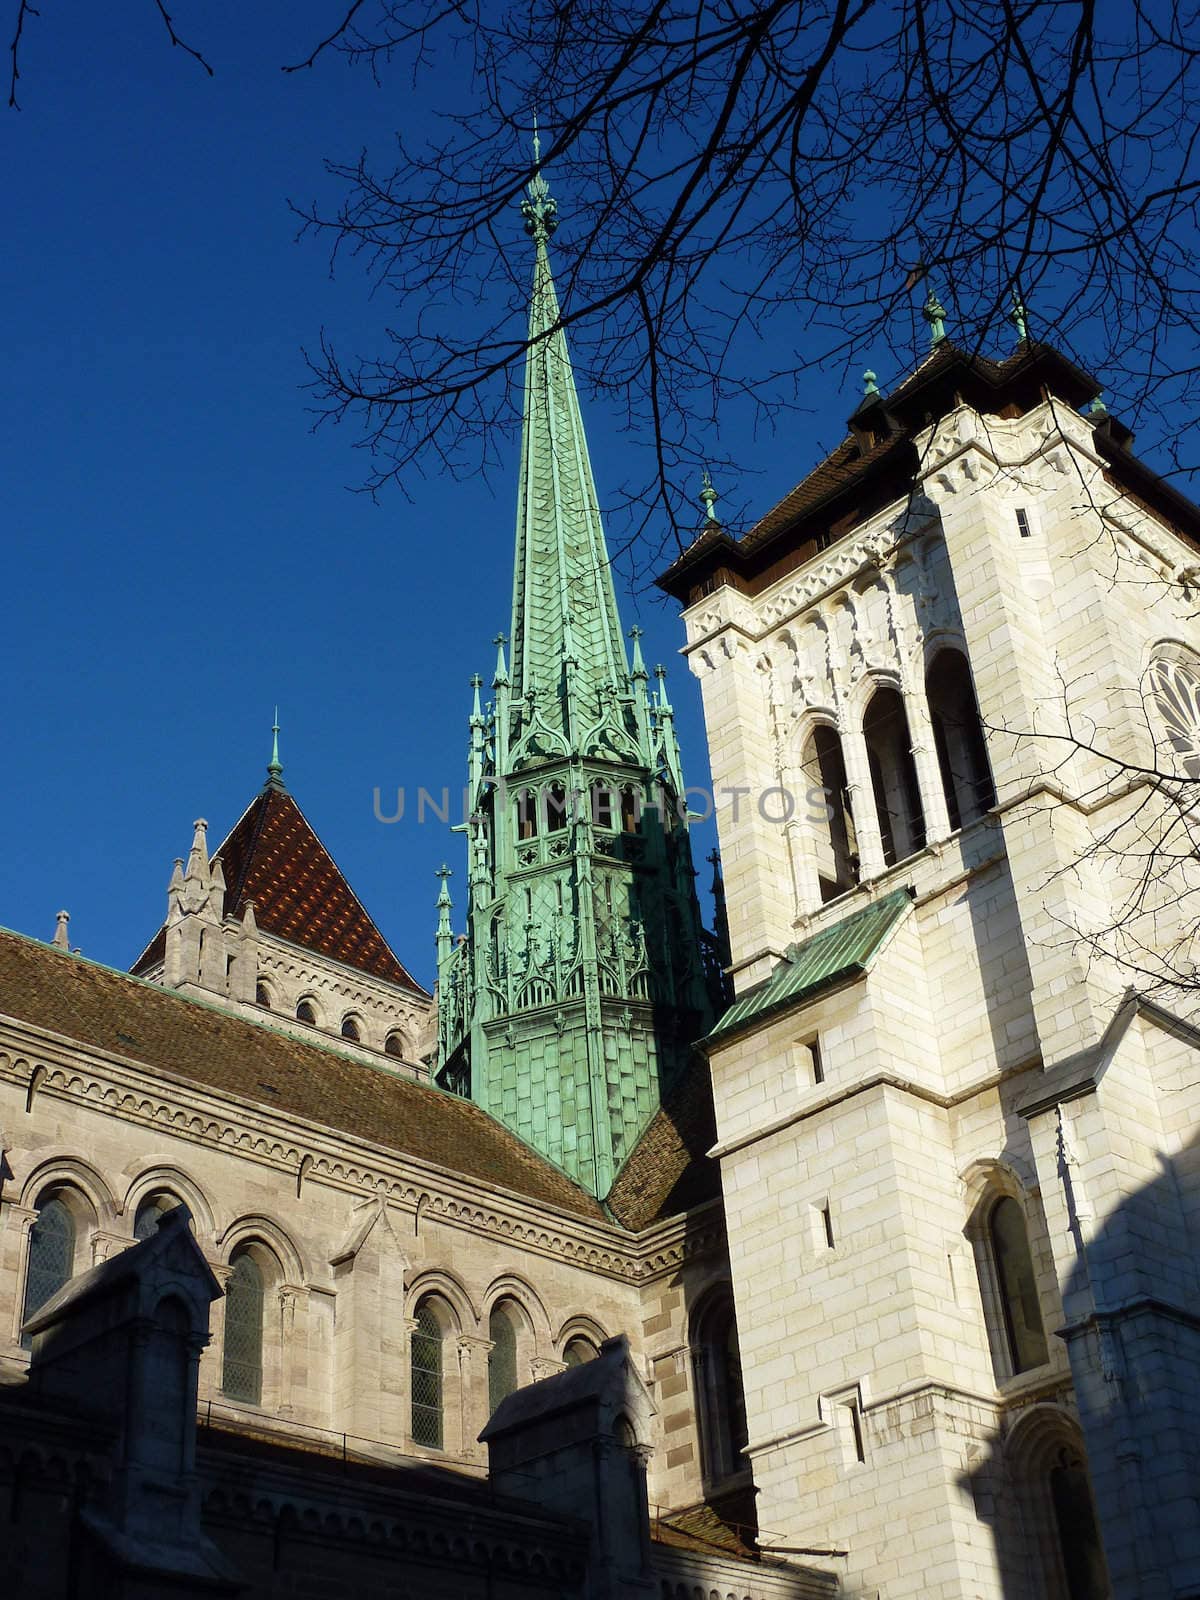 Saint-Pierre's cathedral in Geneva, Switzerland by Elenaphotos21